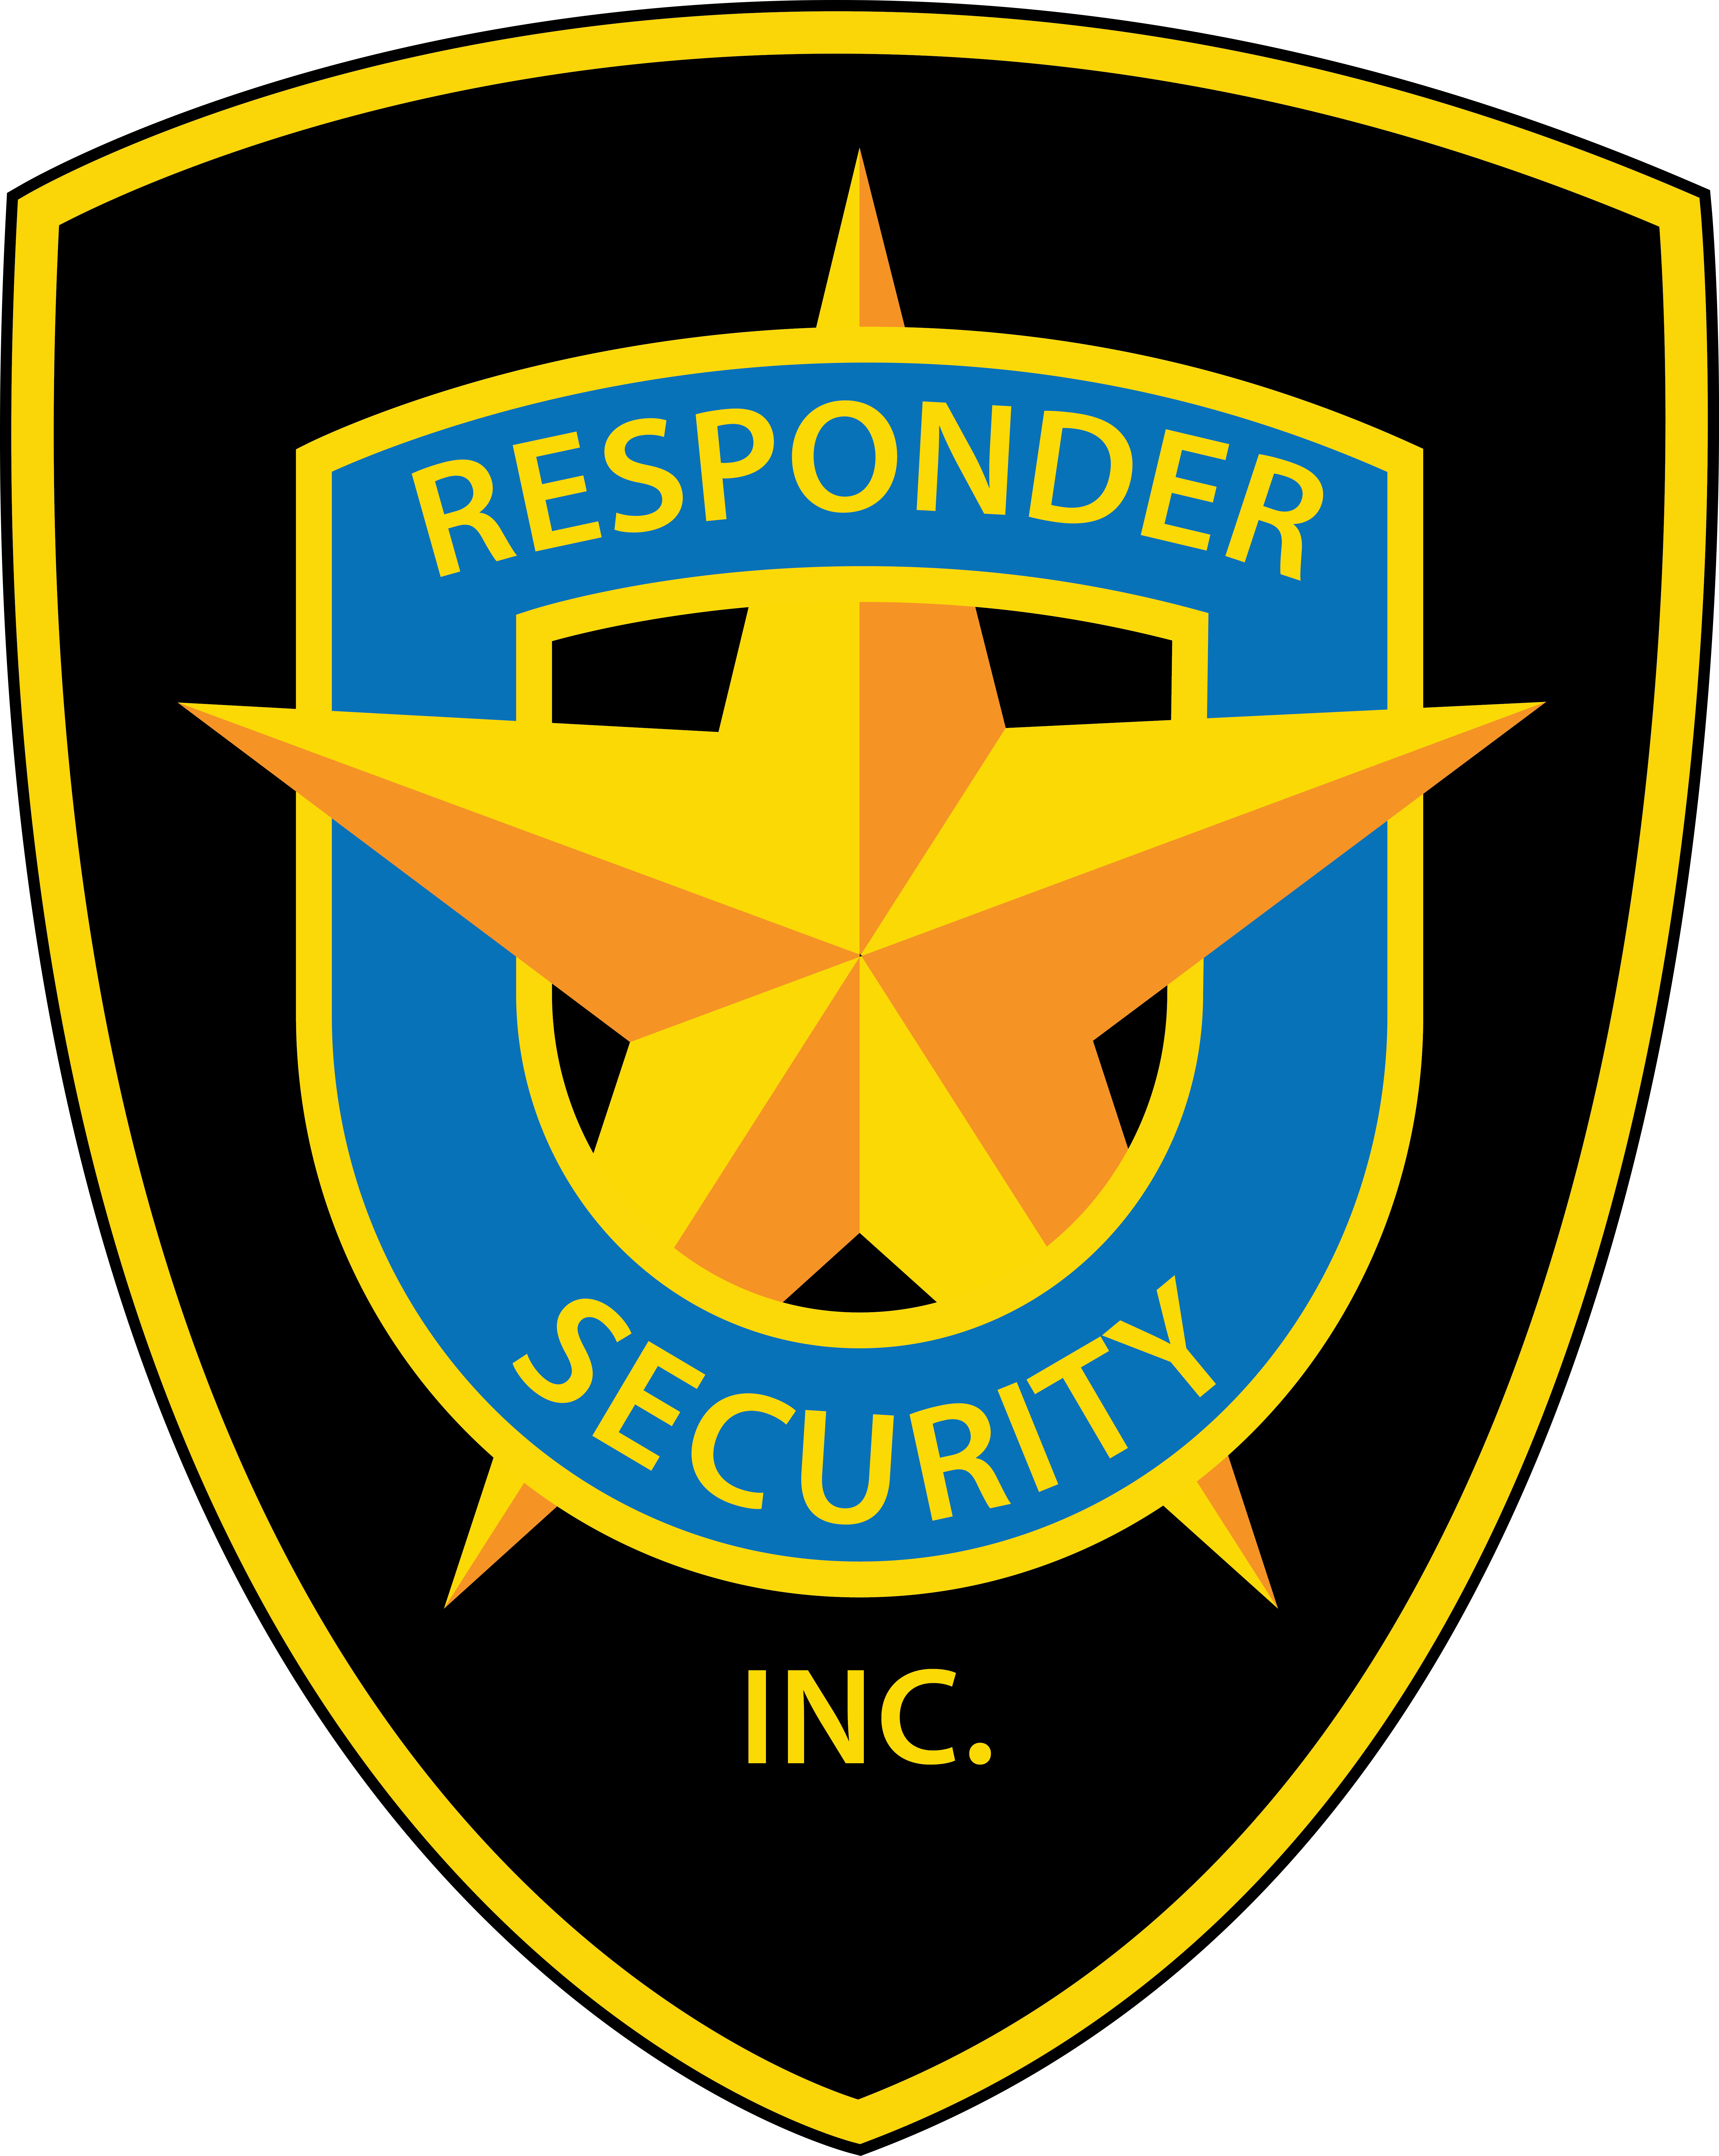 Responder Security Inc One Westbrook Corporate Center Suite 300, Westchester, IL 60154